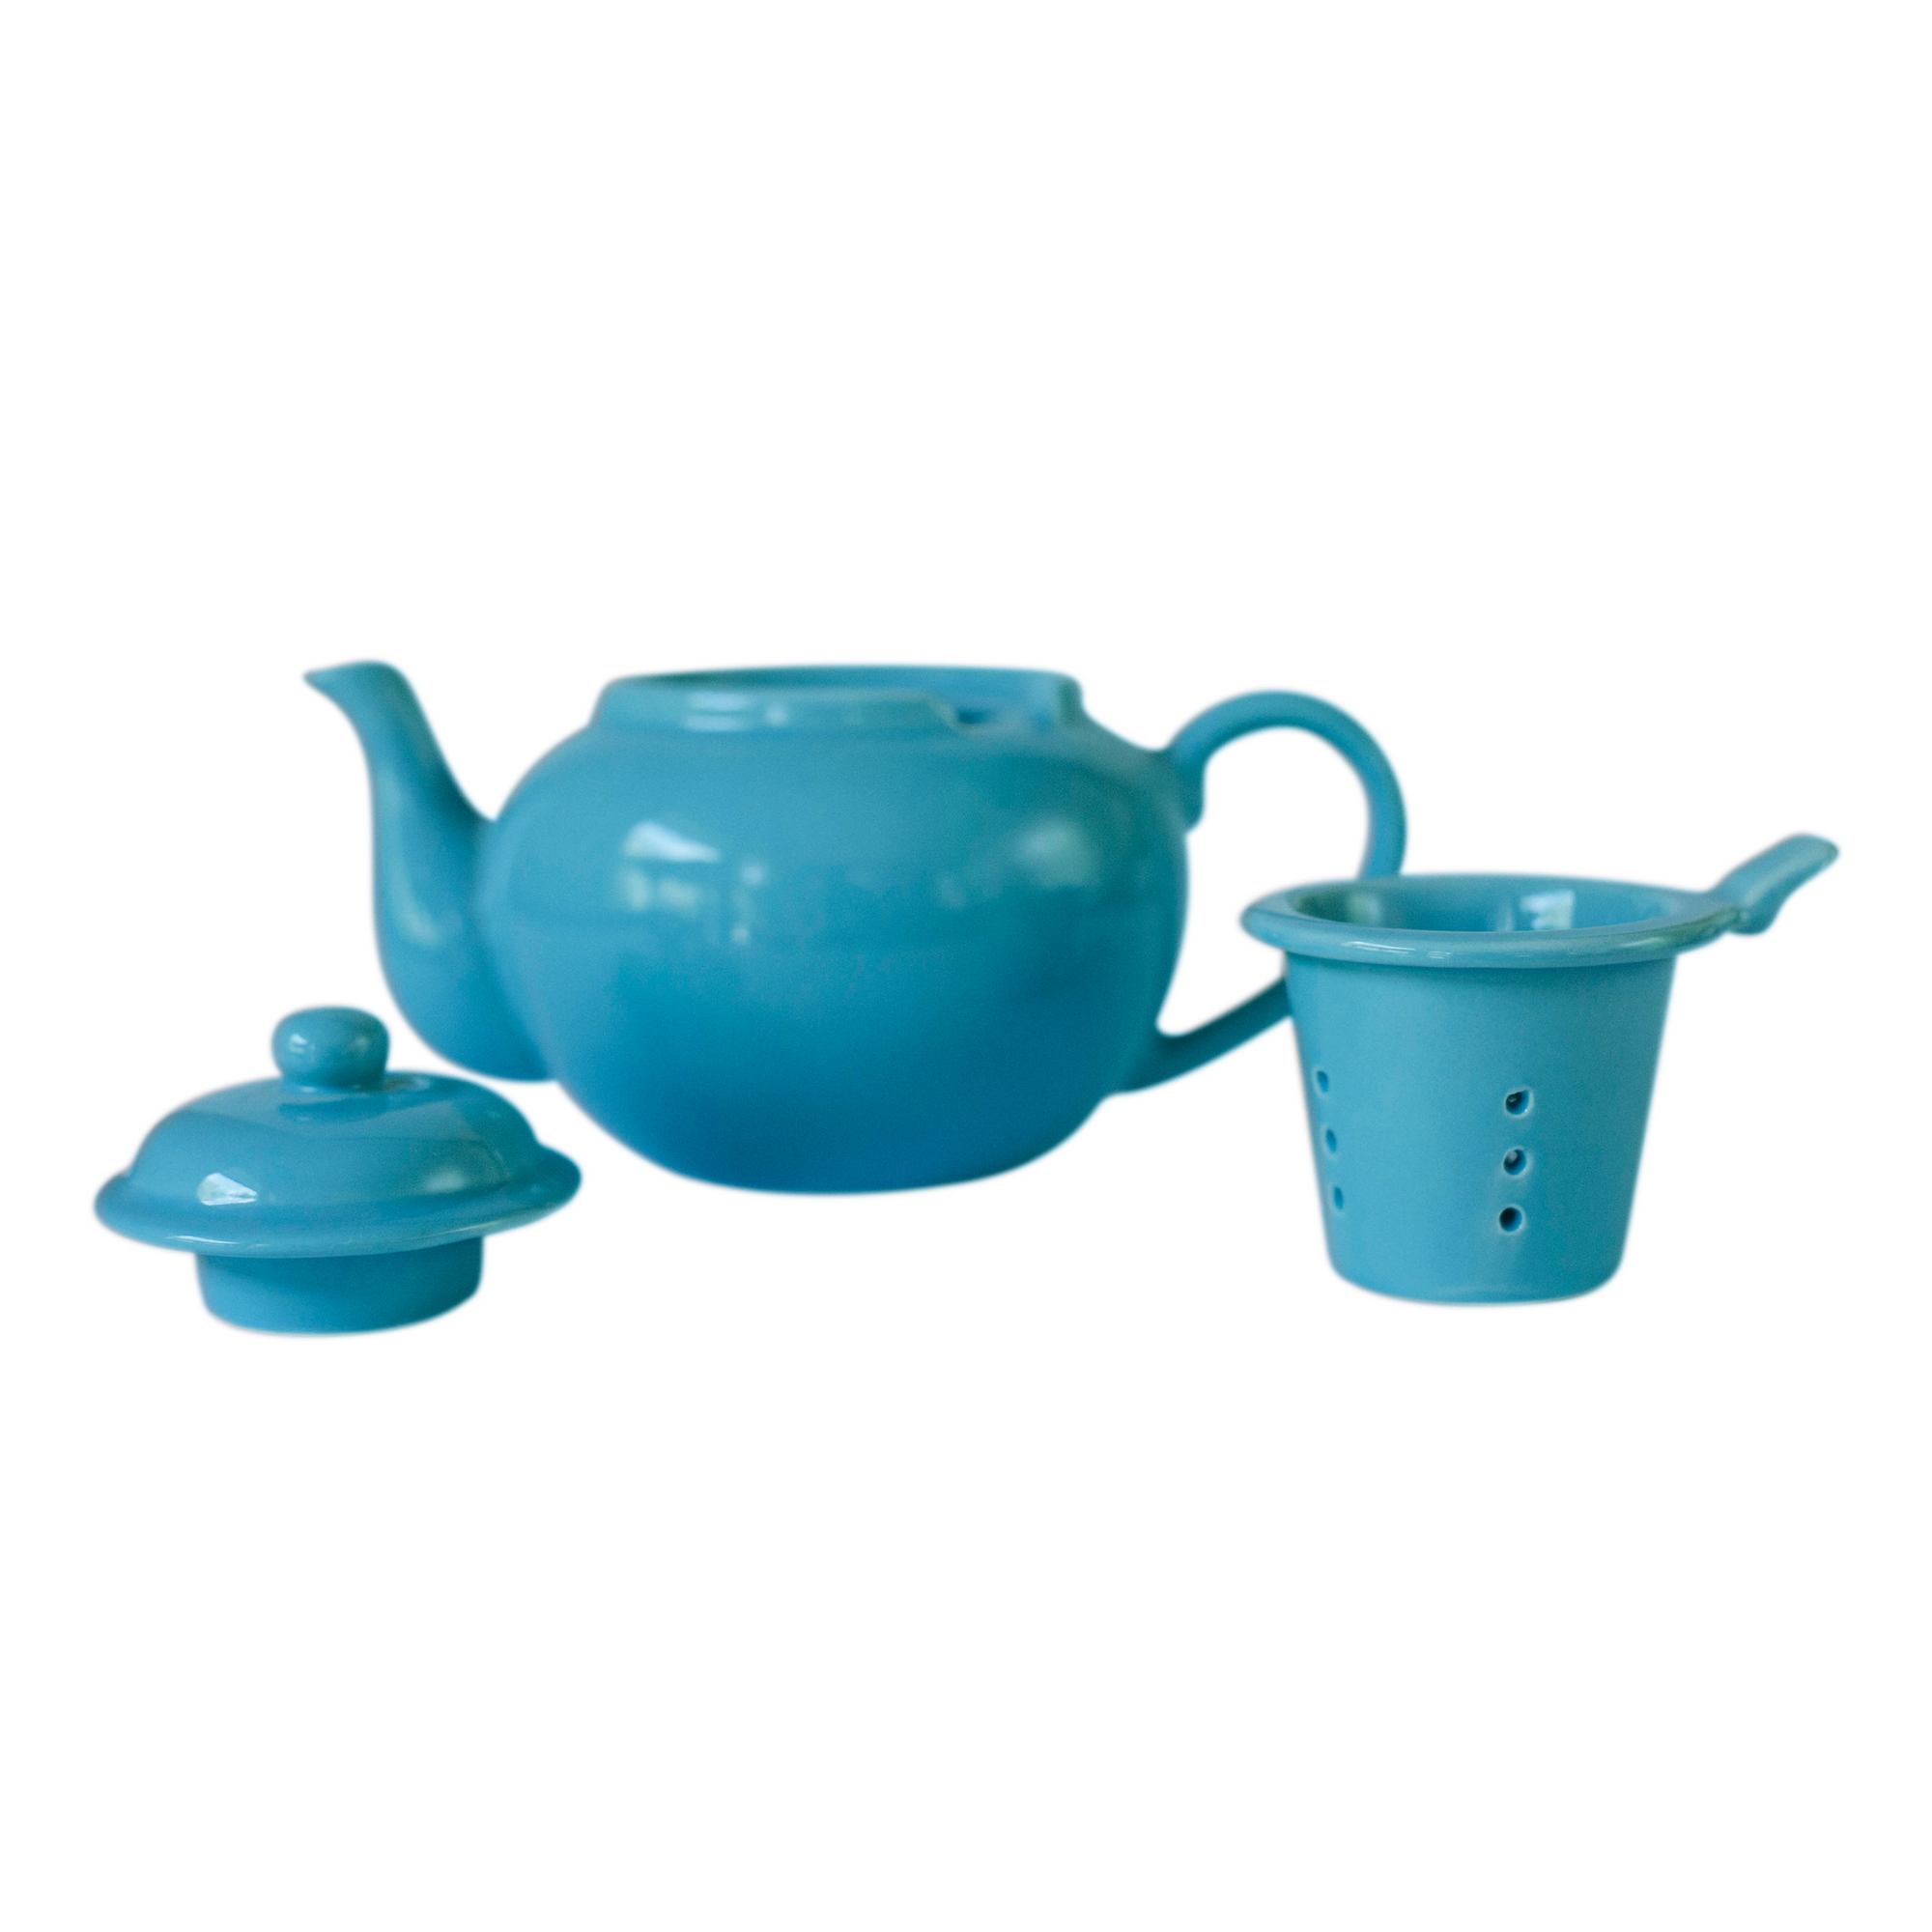 Loose leaf teapot - blue ceramic teapot with  infuser